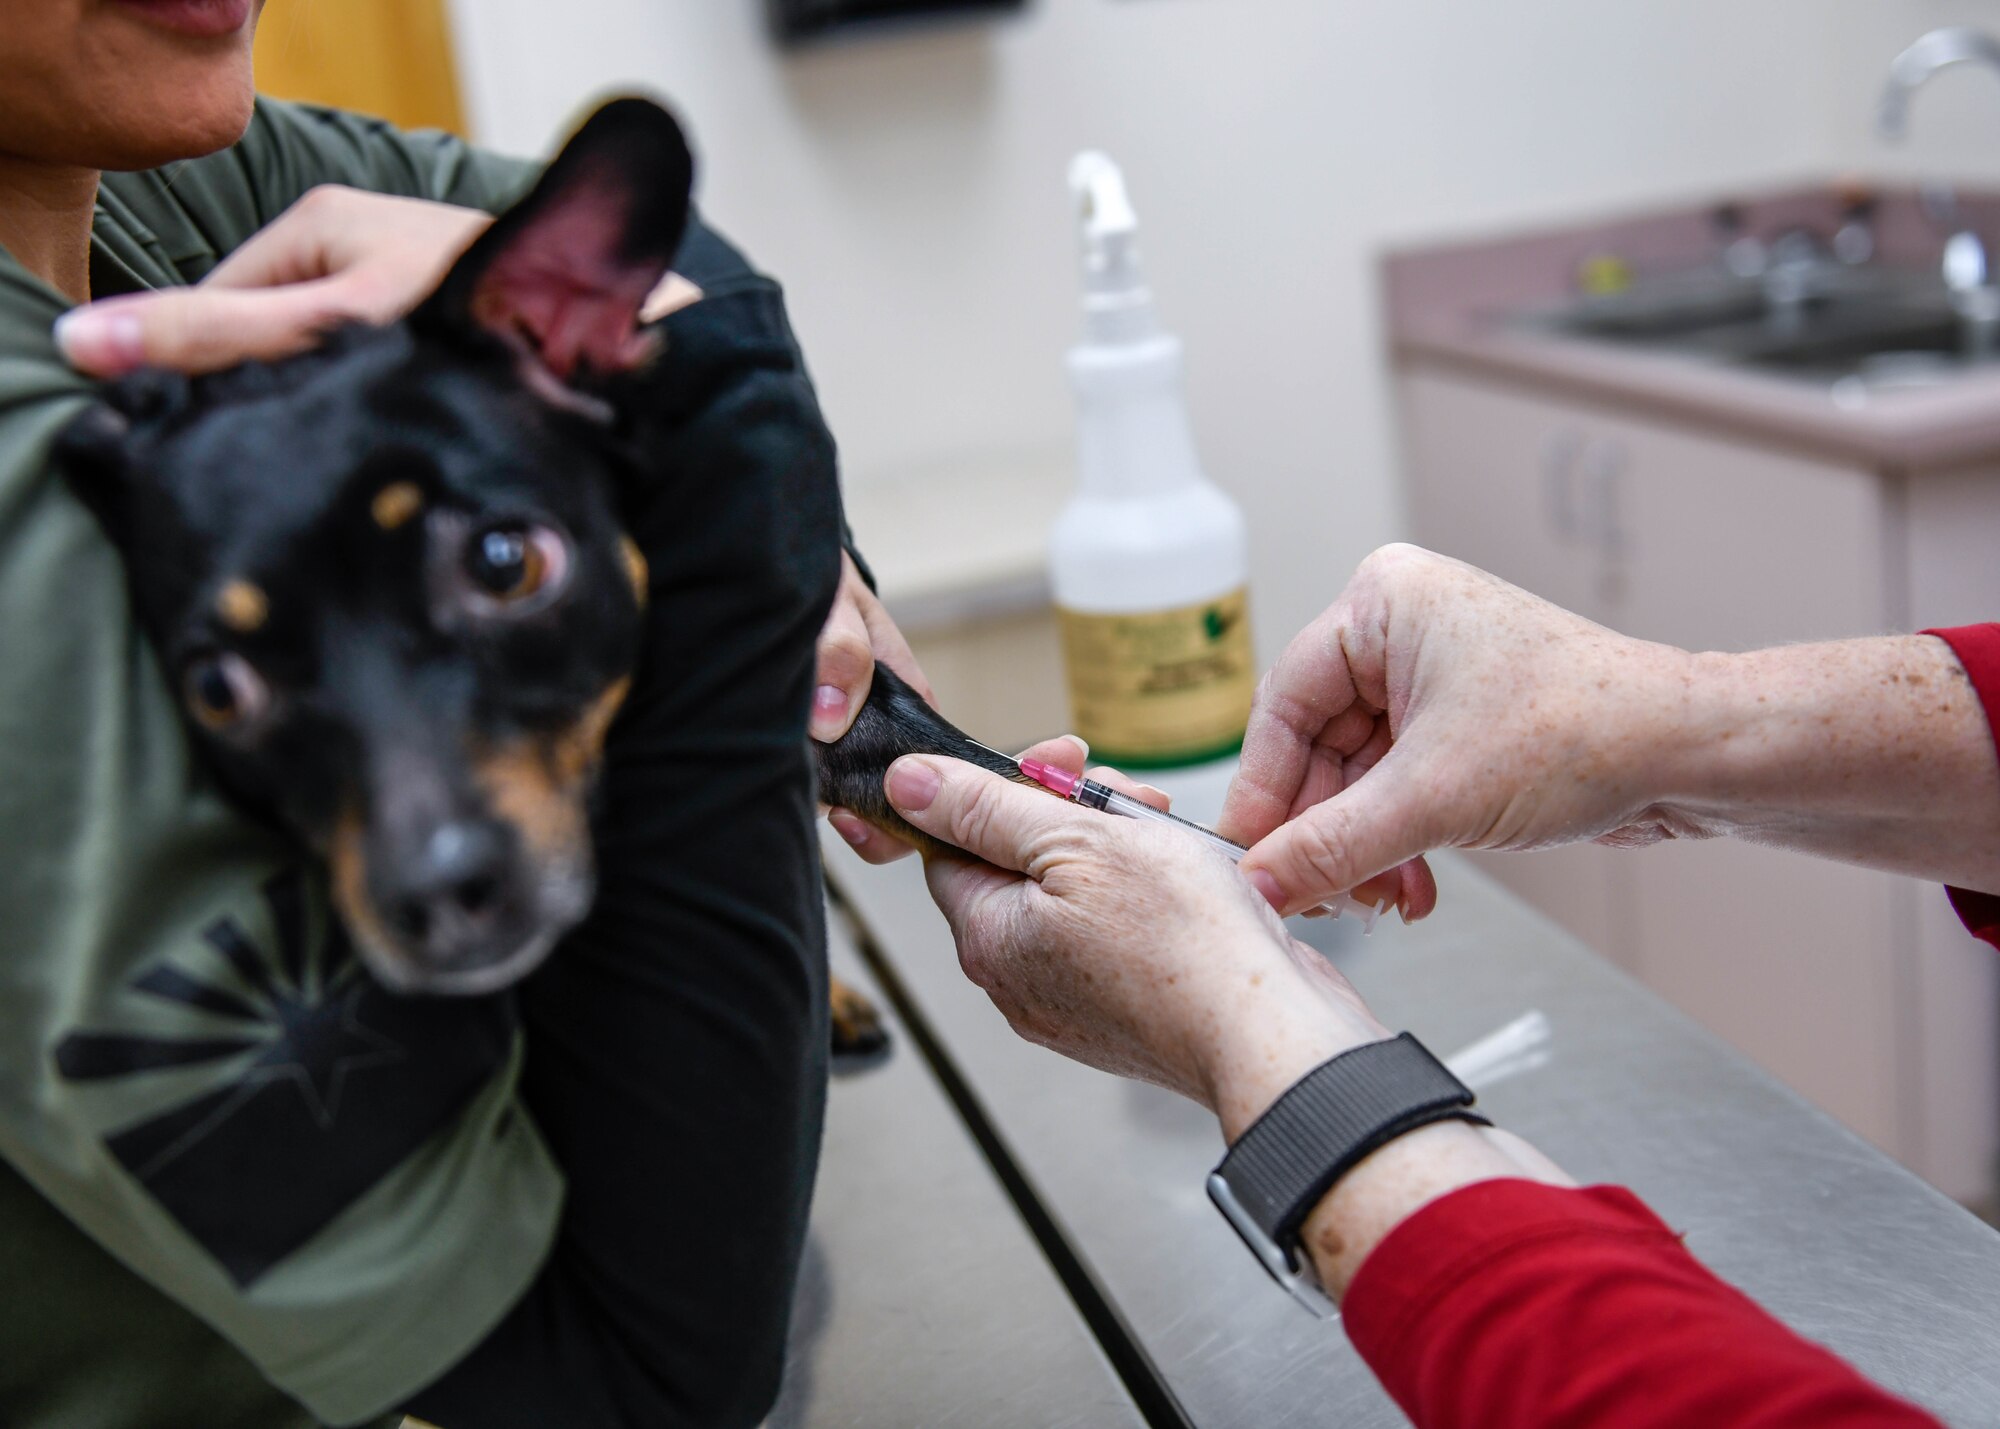 Veterinary Clinic provides care for Luke animals